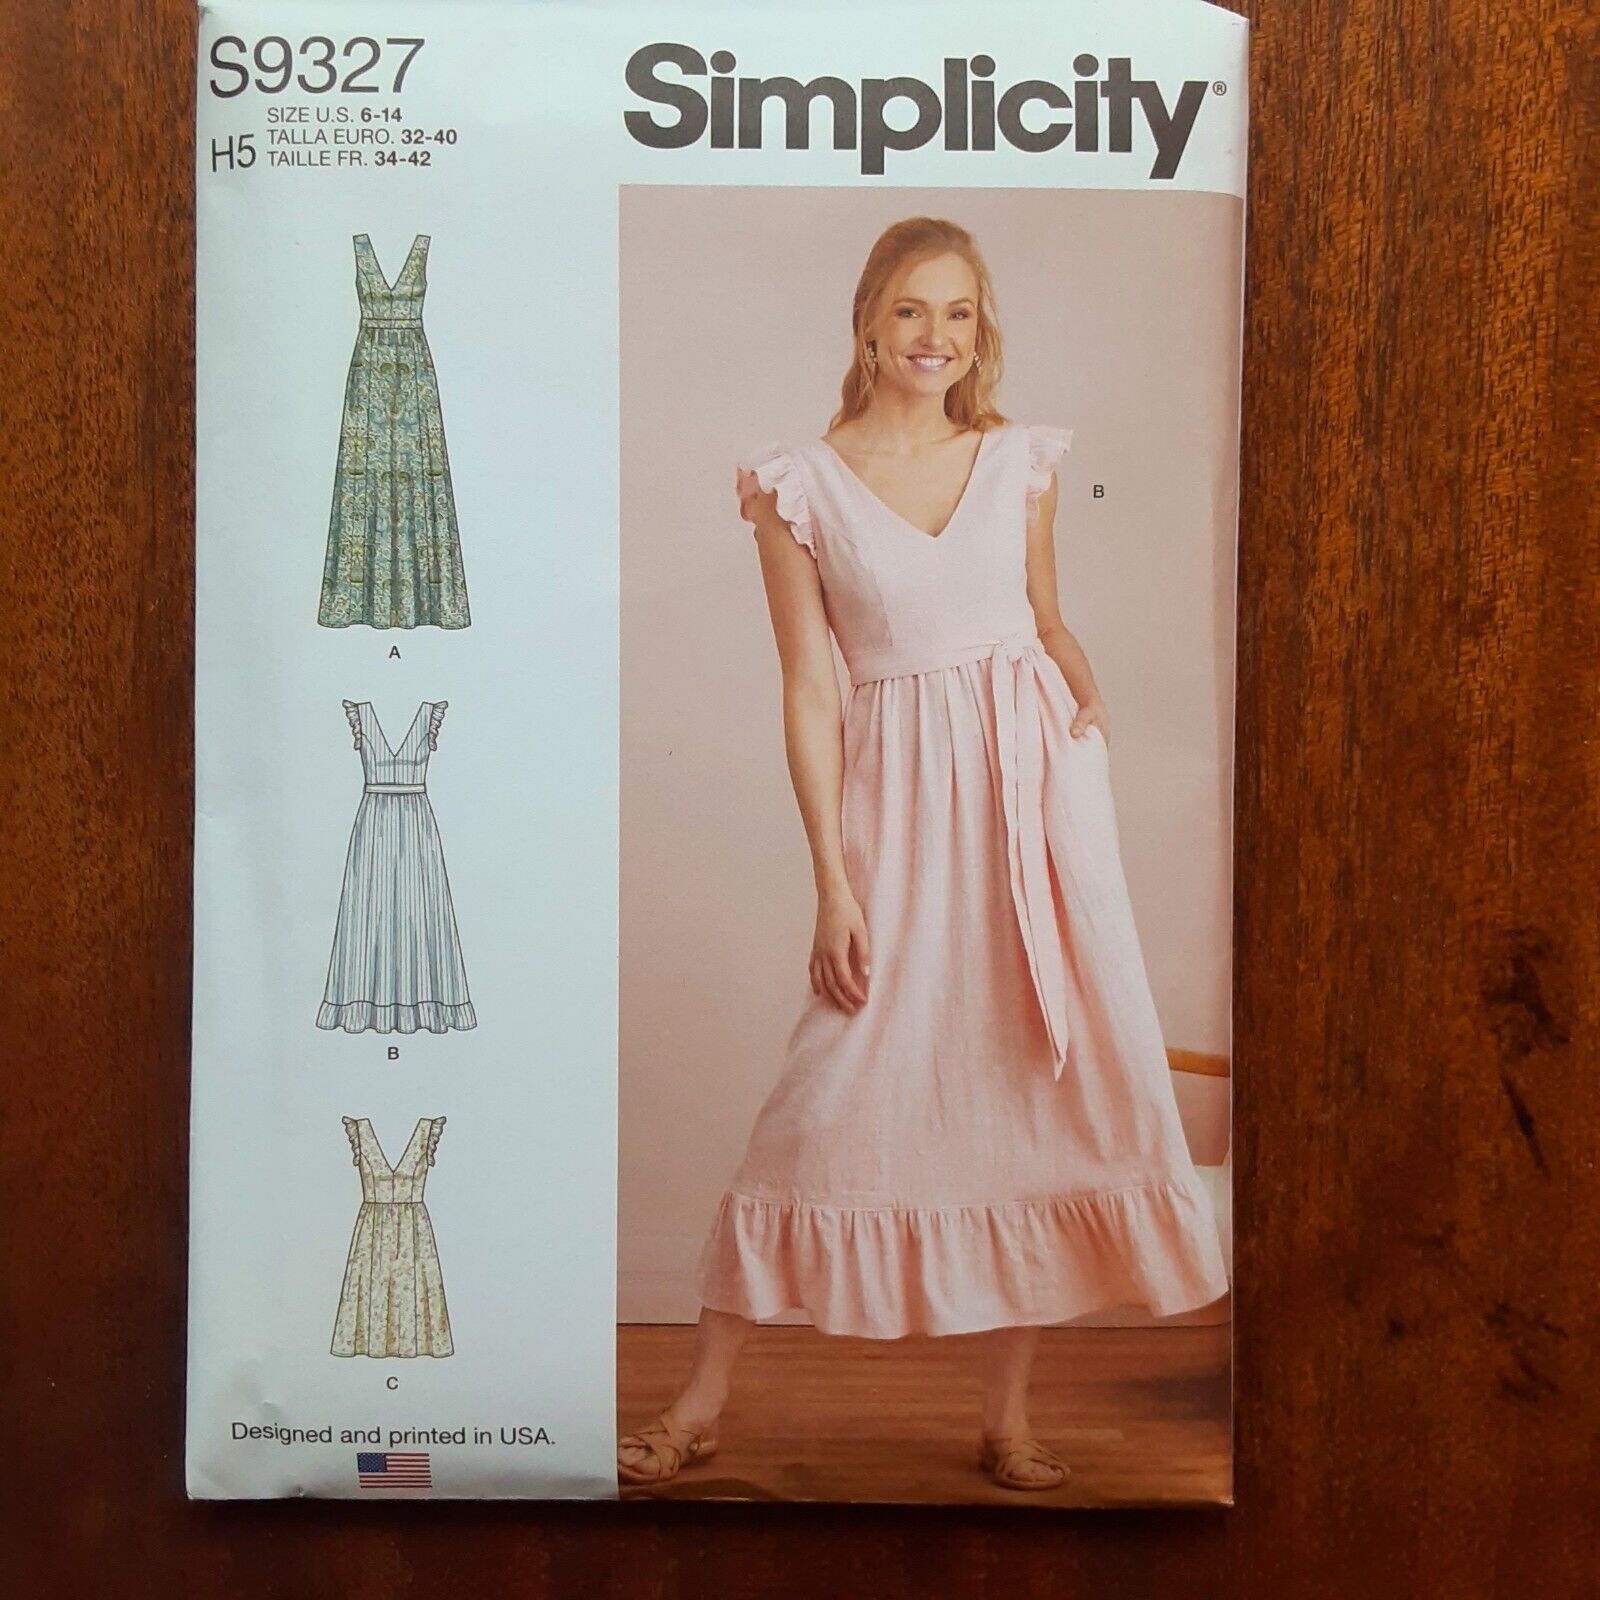 NEW Simplicity S9327 cottage core dress pattern Size 6-14.